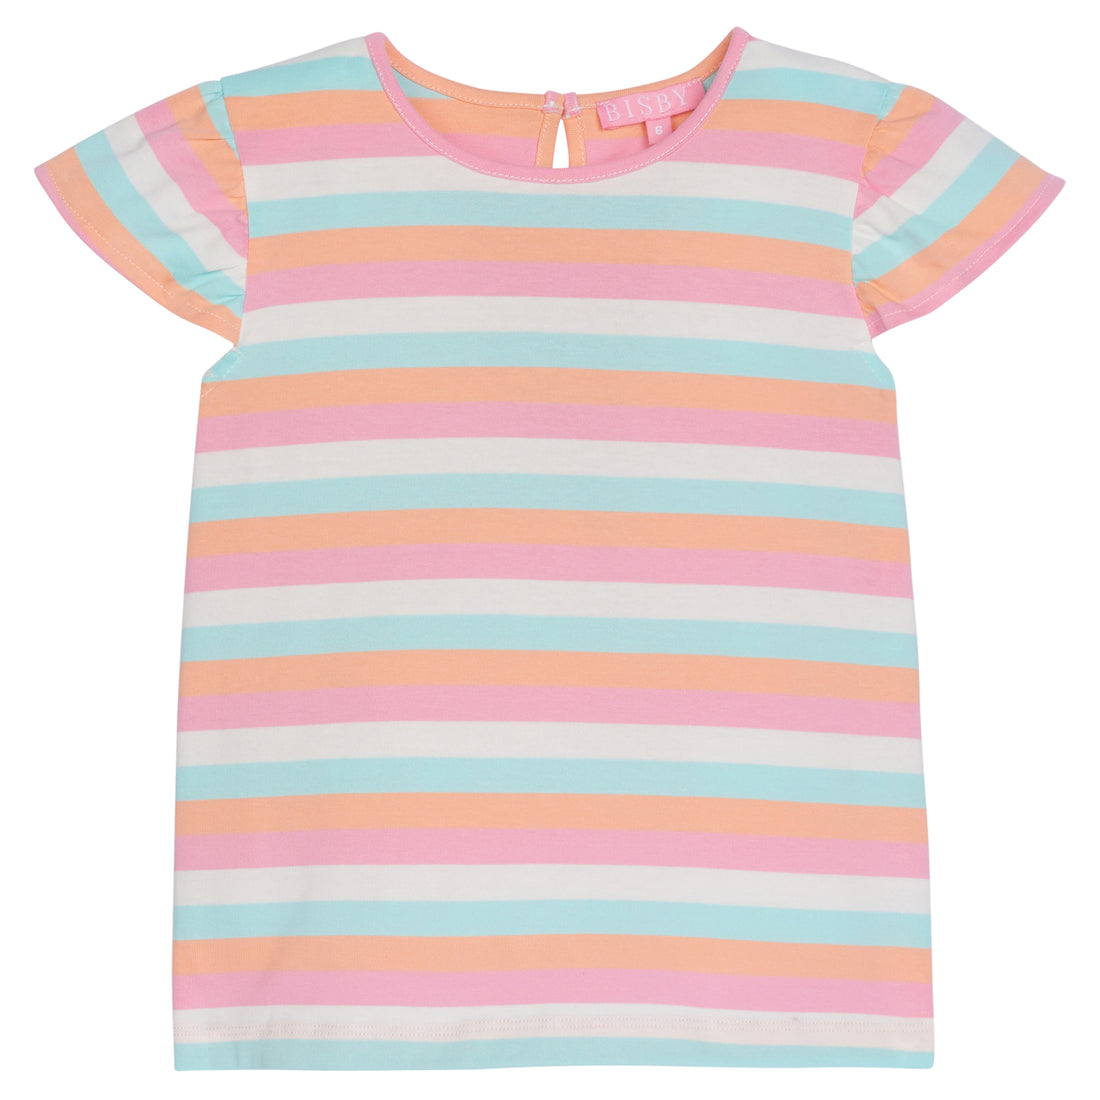 Girl angel sleeve tee with light pink, orange, white, and aqua stripe